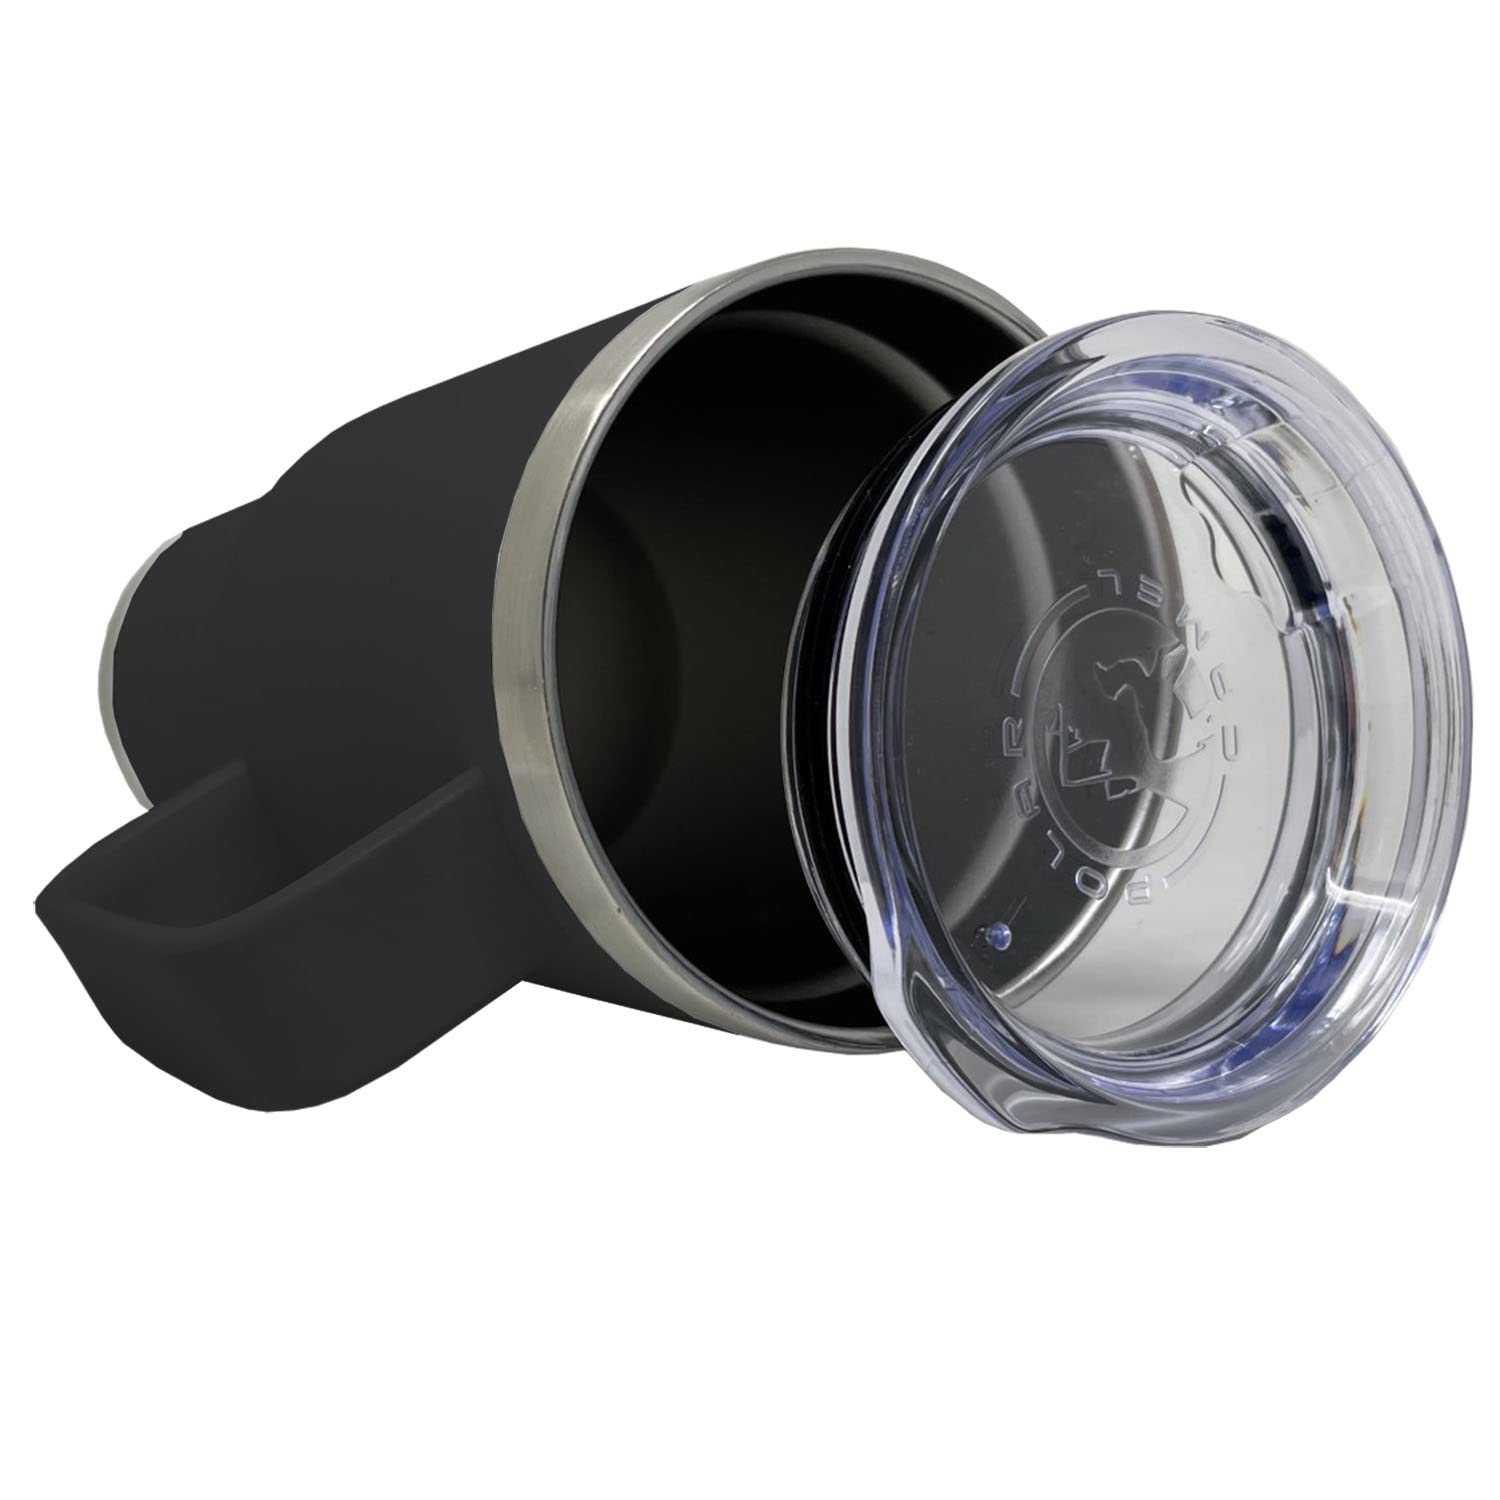 LaserGram 20oz Vacuum Insulated Travel Mug with Handle, Horse Head 1, Personalized Engraving Included (Black)